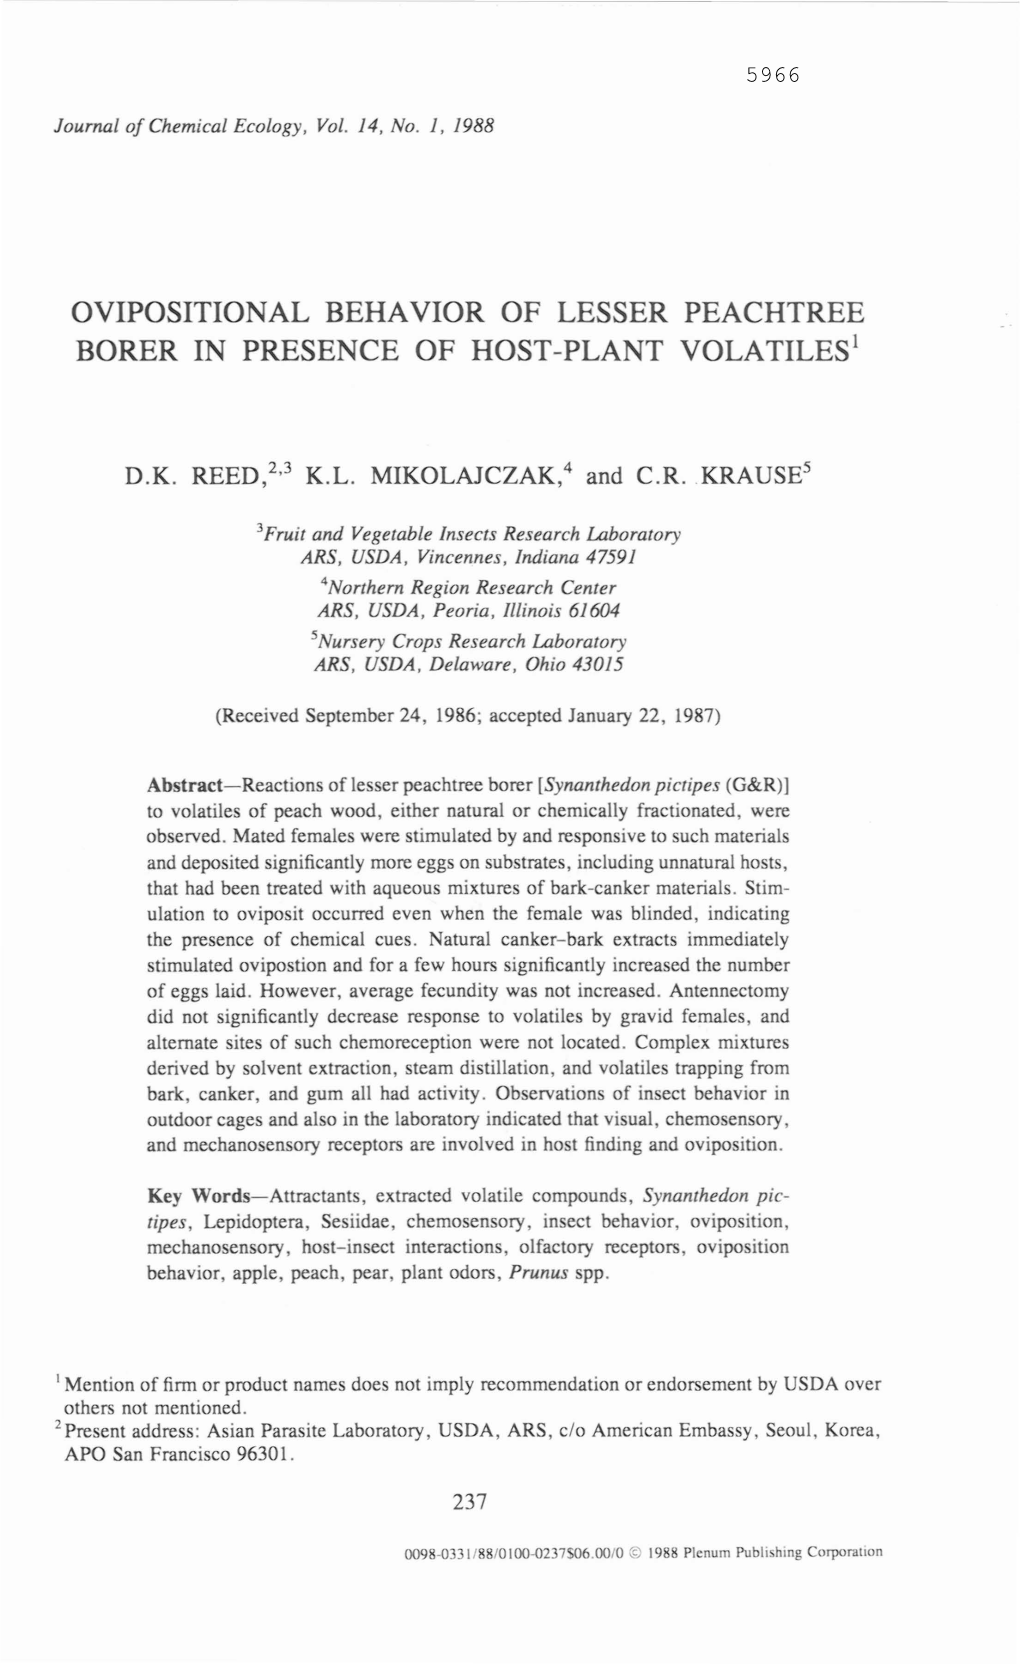 Ovipositional Behavior of Lesser Peachtree Borer in Presence of Host-Plant Volatiles 1